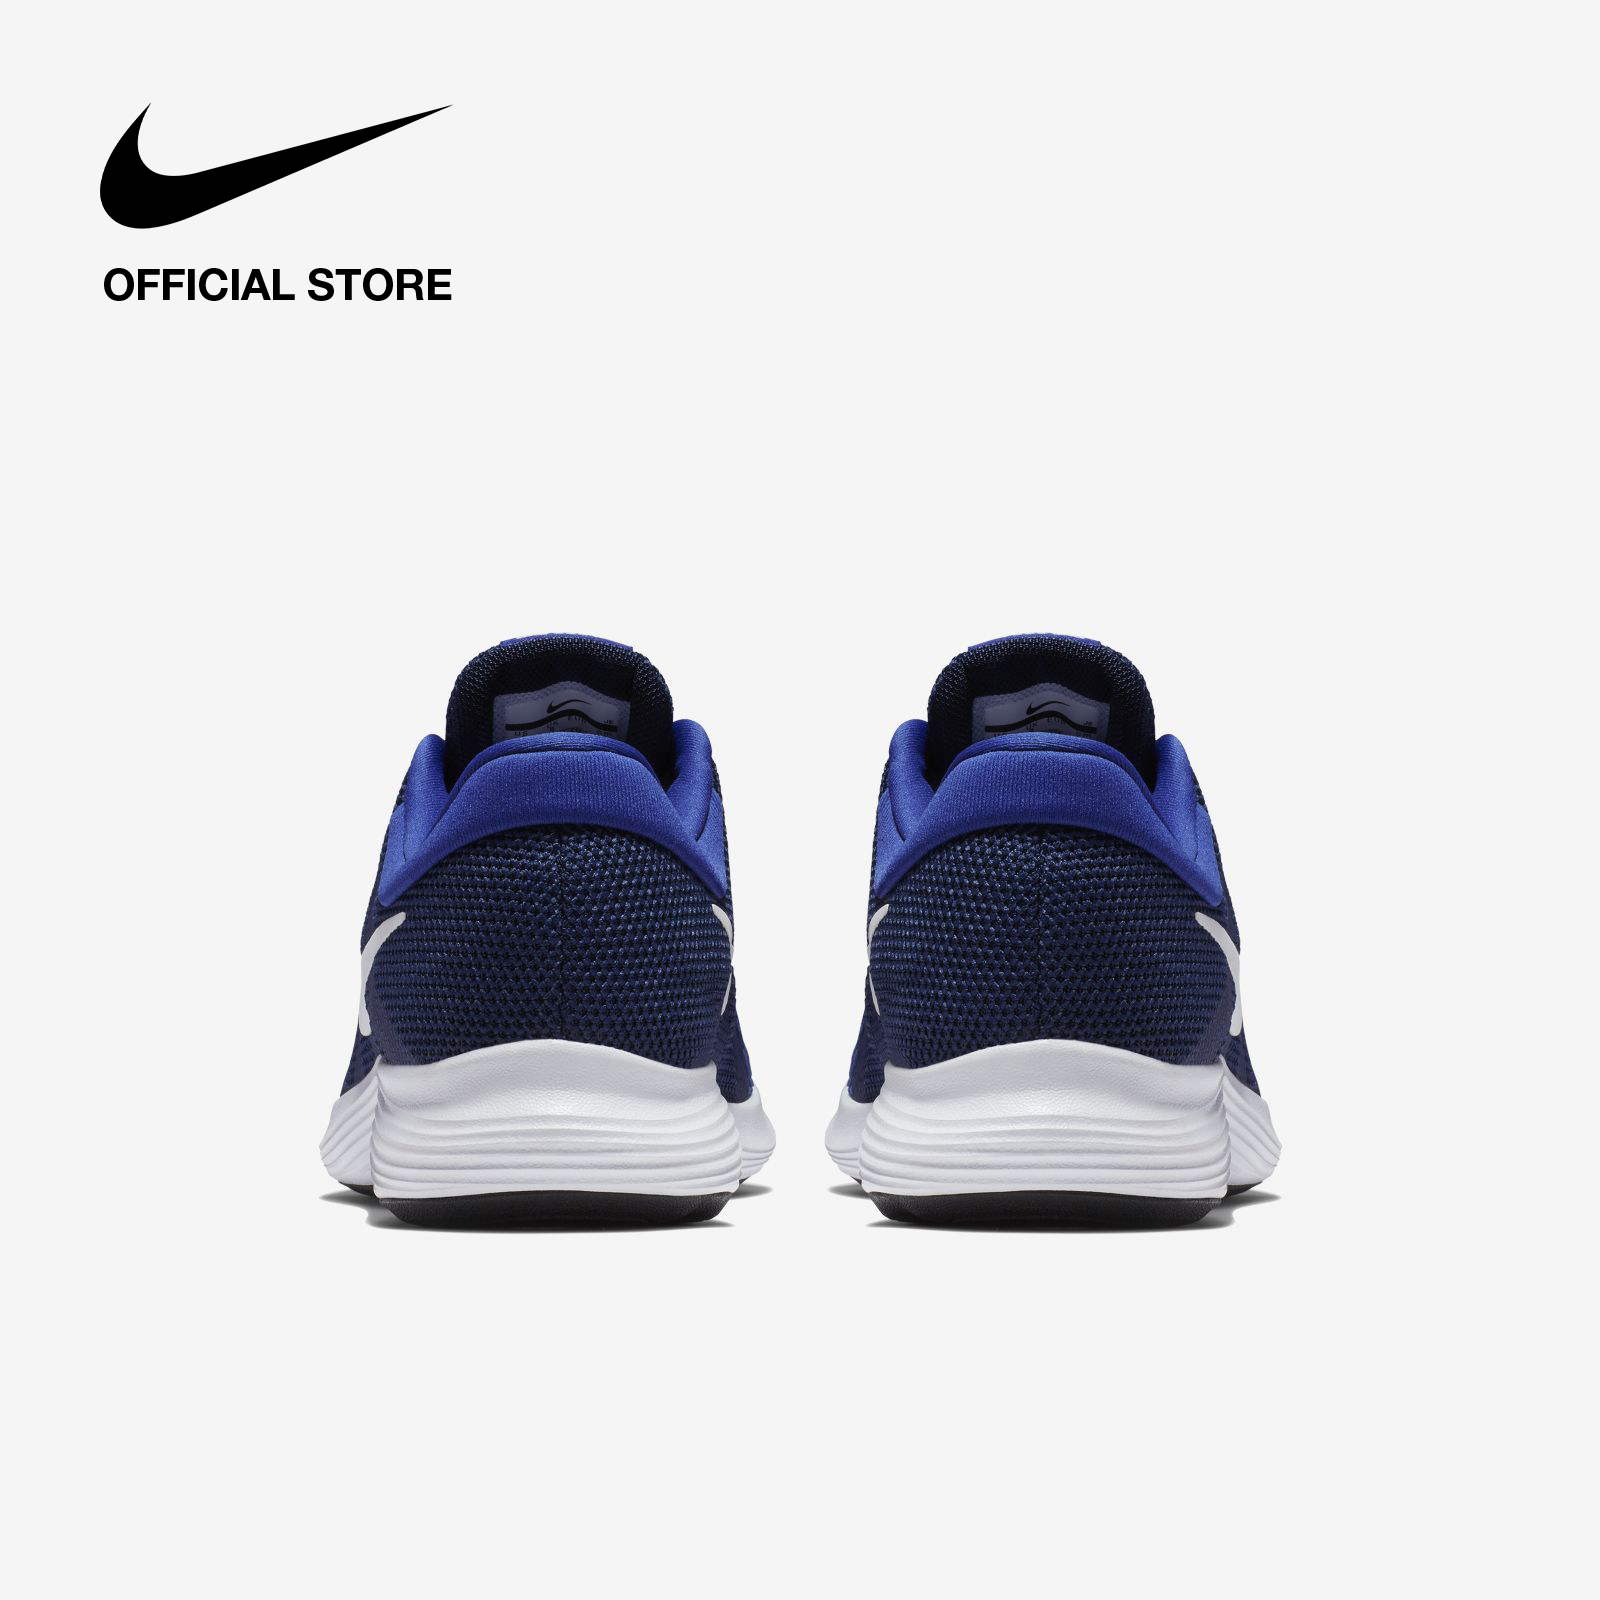 Nike Men's Revolution 4 Shoes - Midnight Navy รองเท้าผู้ชาย Nike Revolution 4 - สีมิดไนท์นาวี